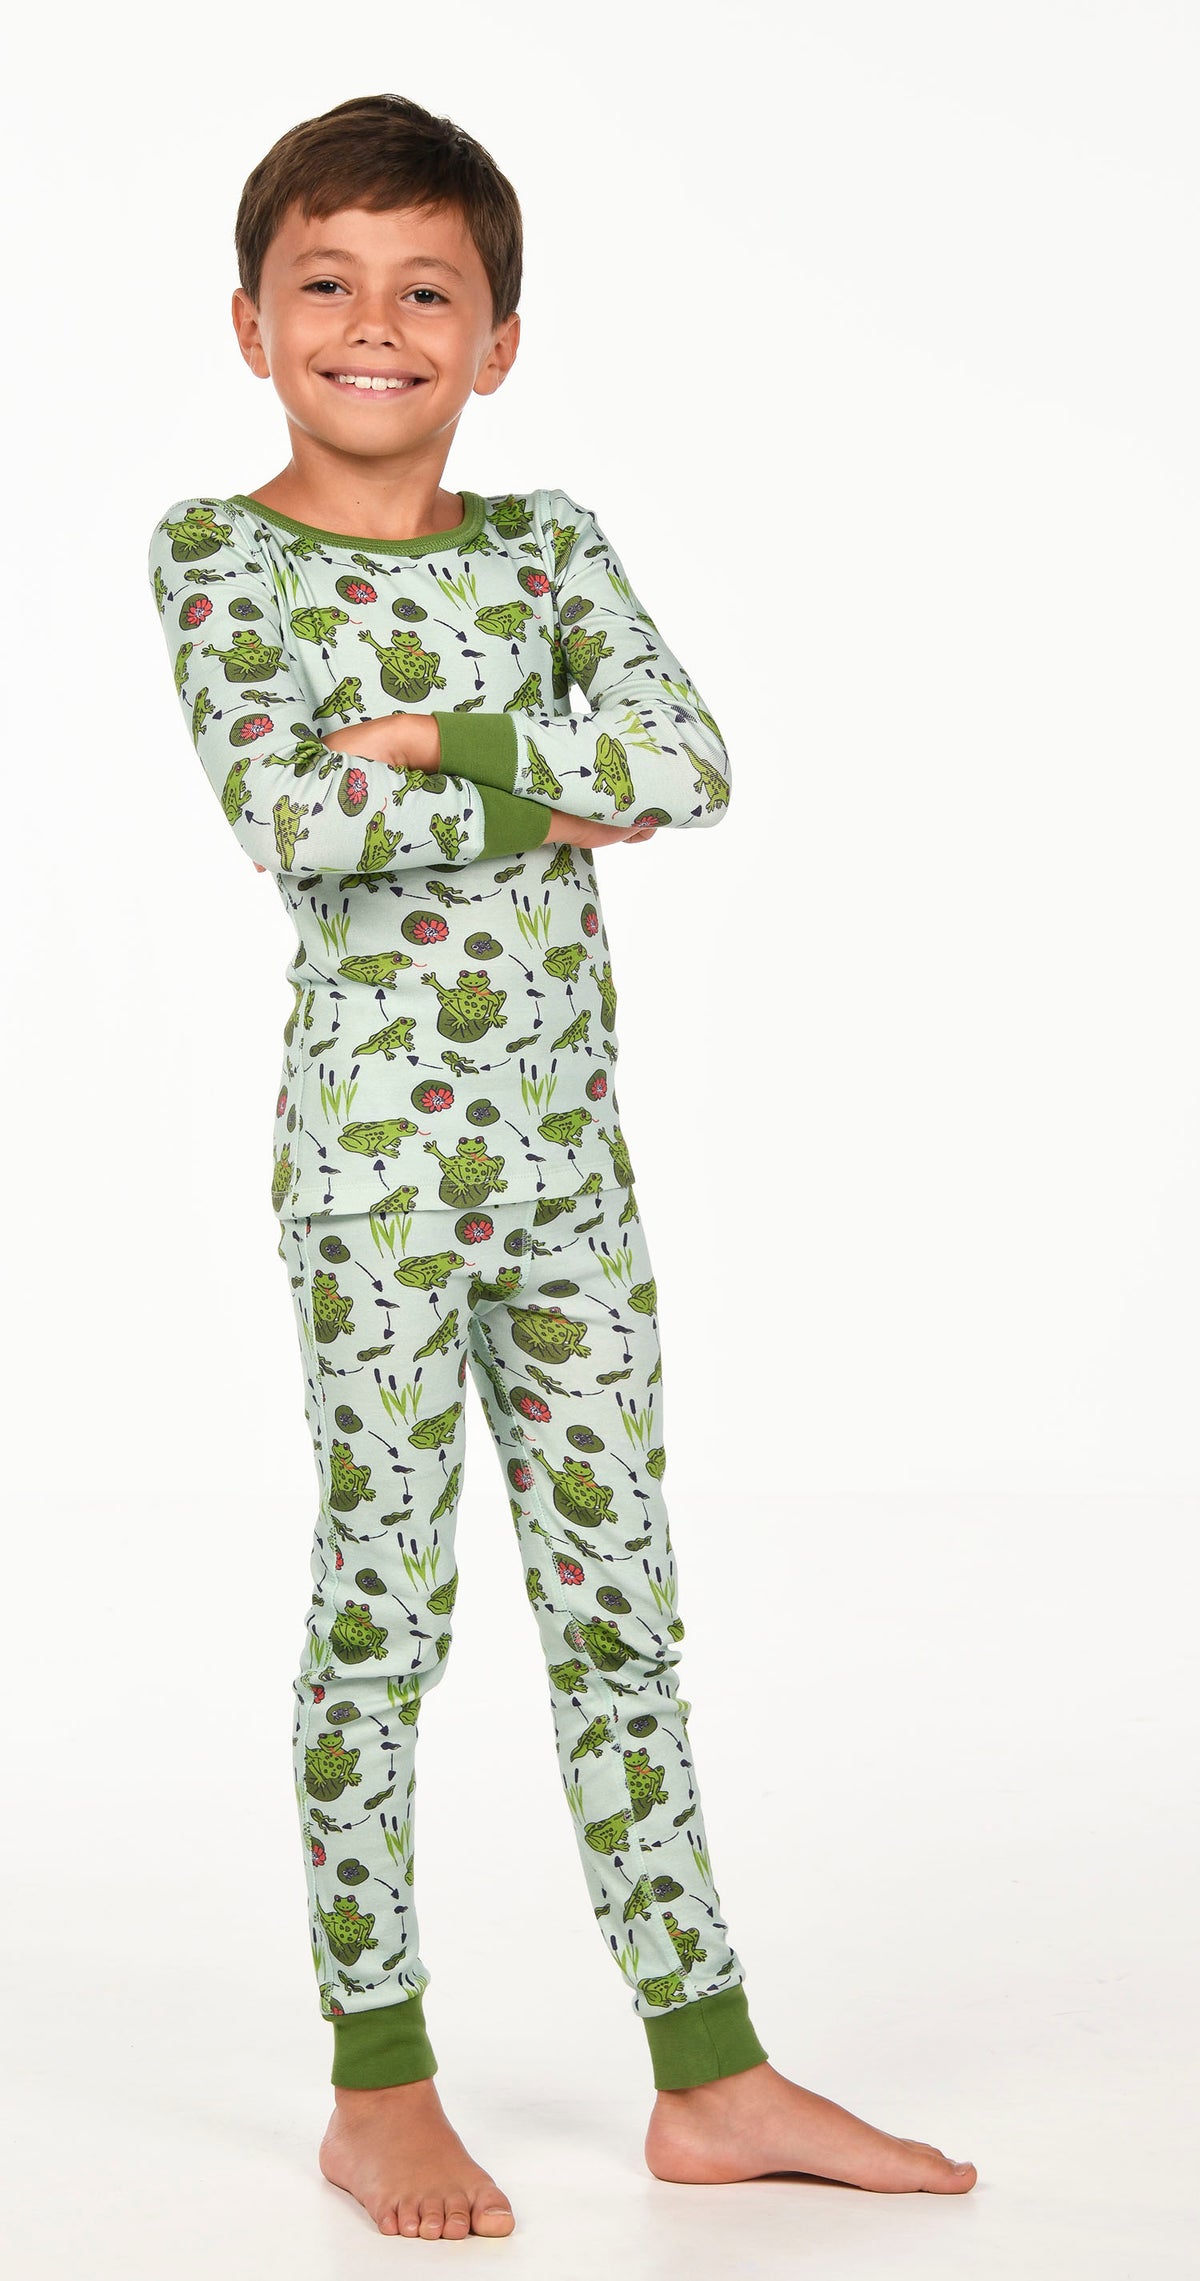 Smart Dreams - Life Cycle of a Frog pajamas and cards